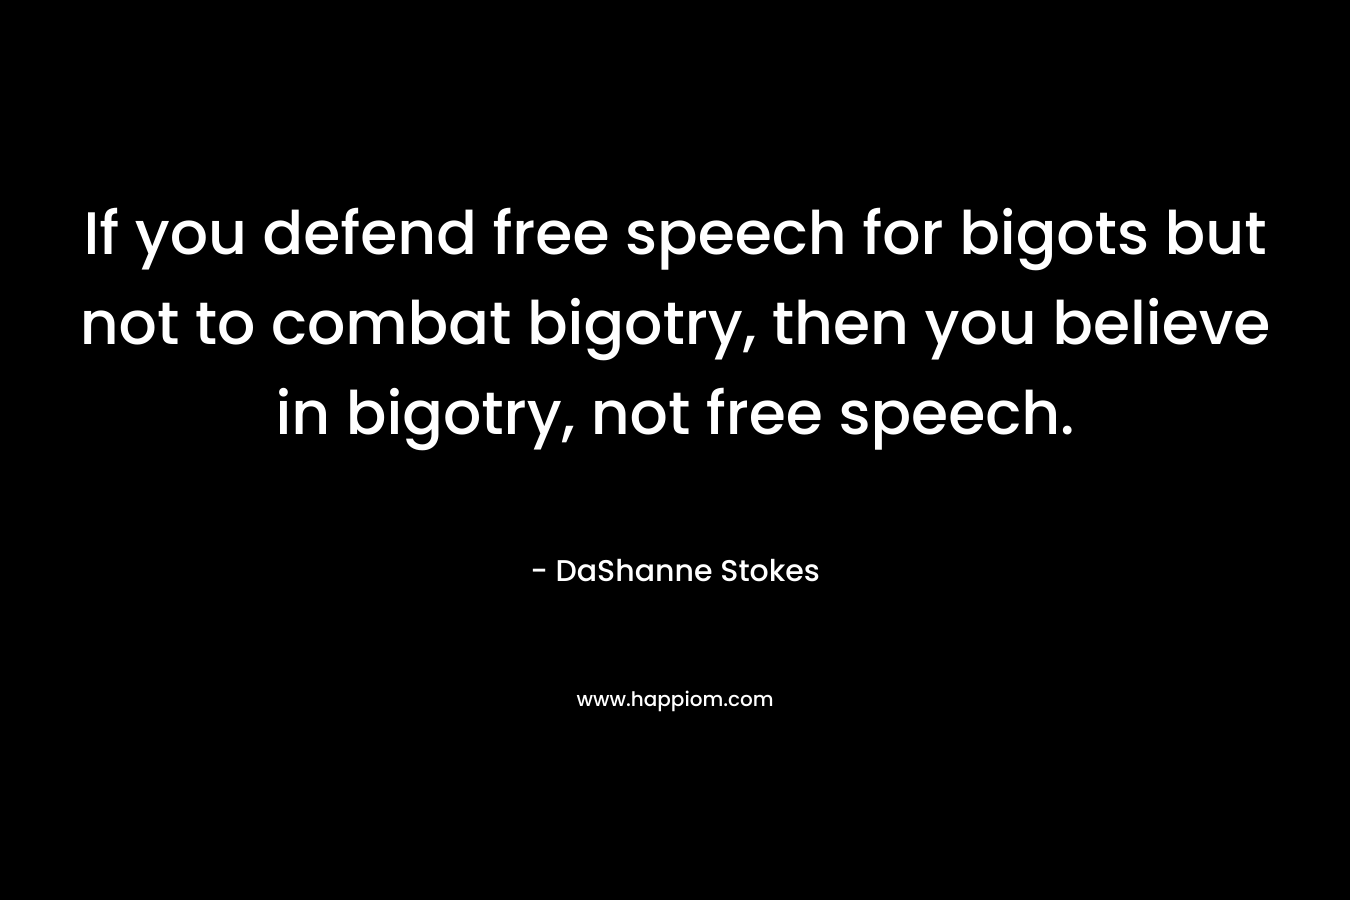 If you defend free speech for bigots but not to combat bigotry, then you believe in bigotry, not free speech.